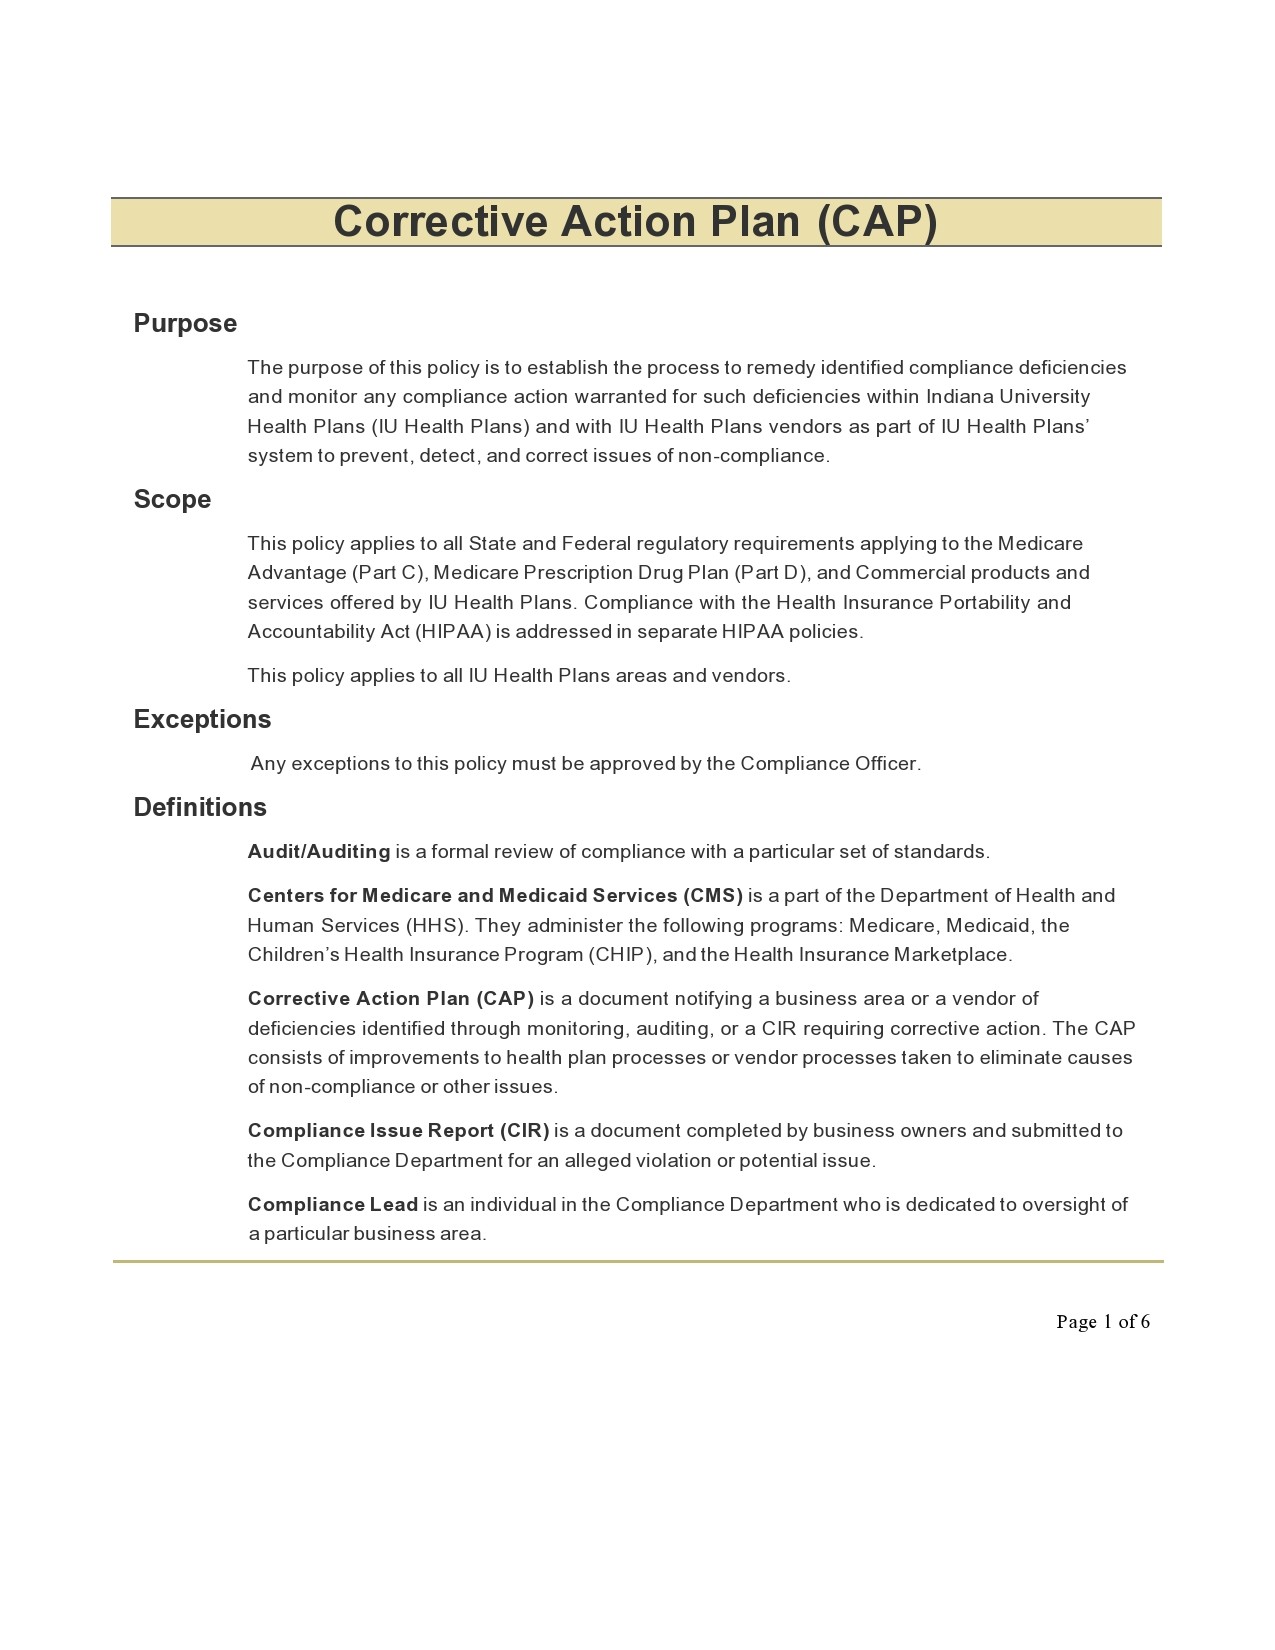 Free corrective action plan template 19